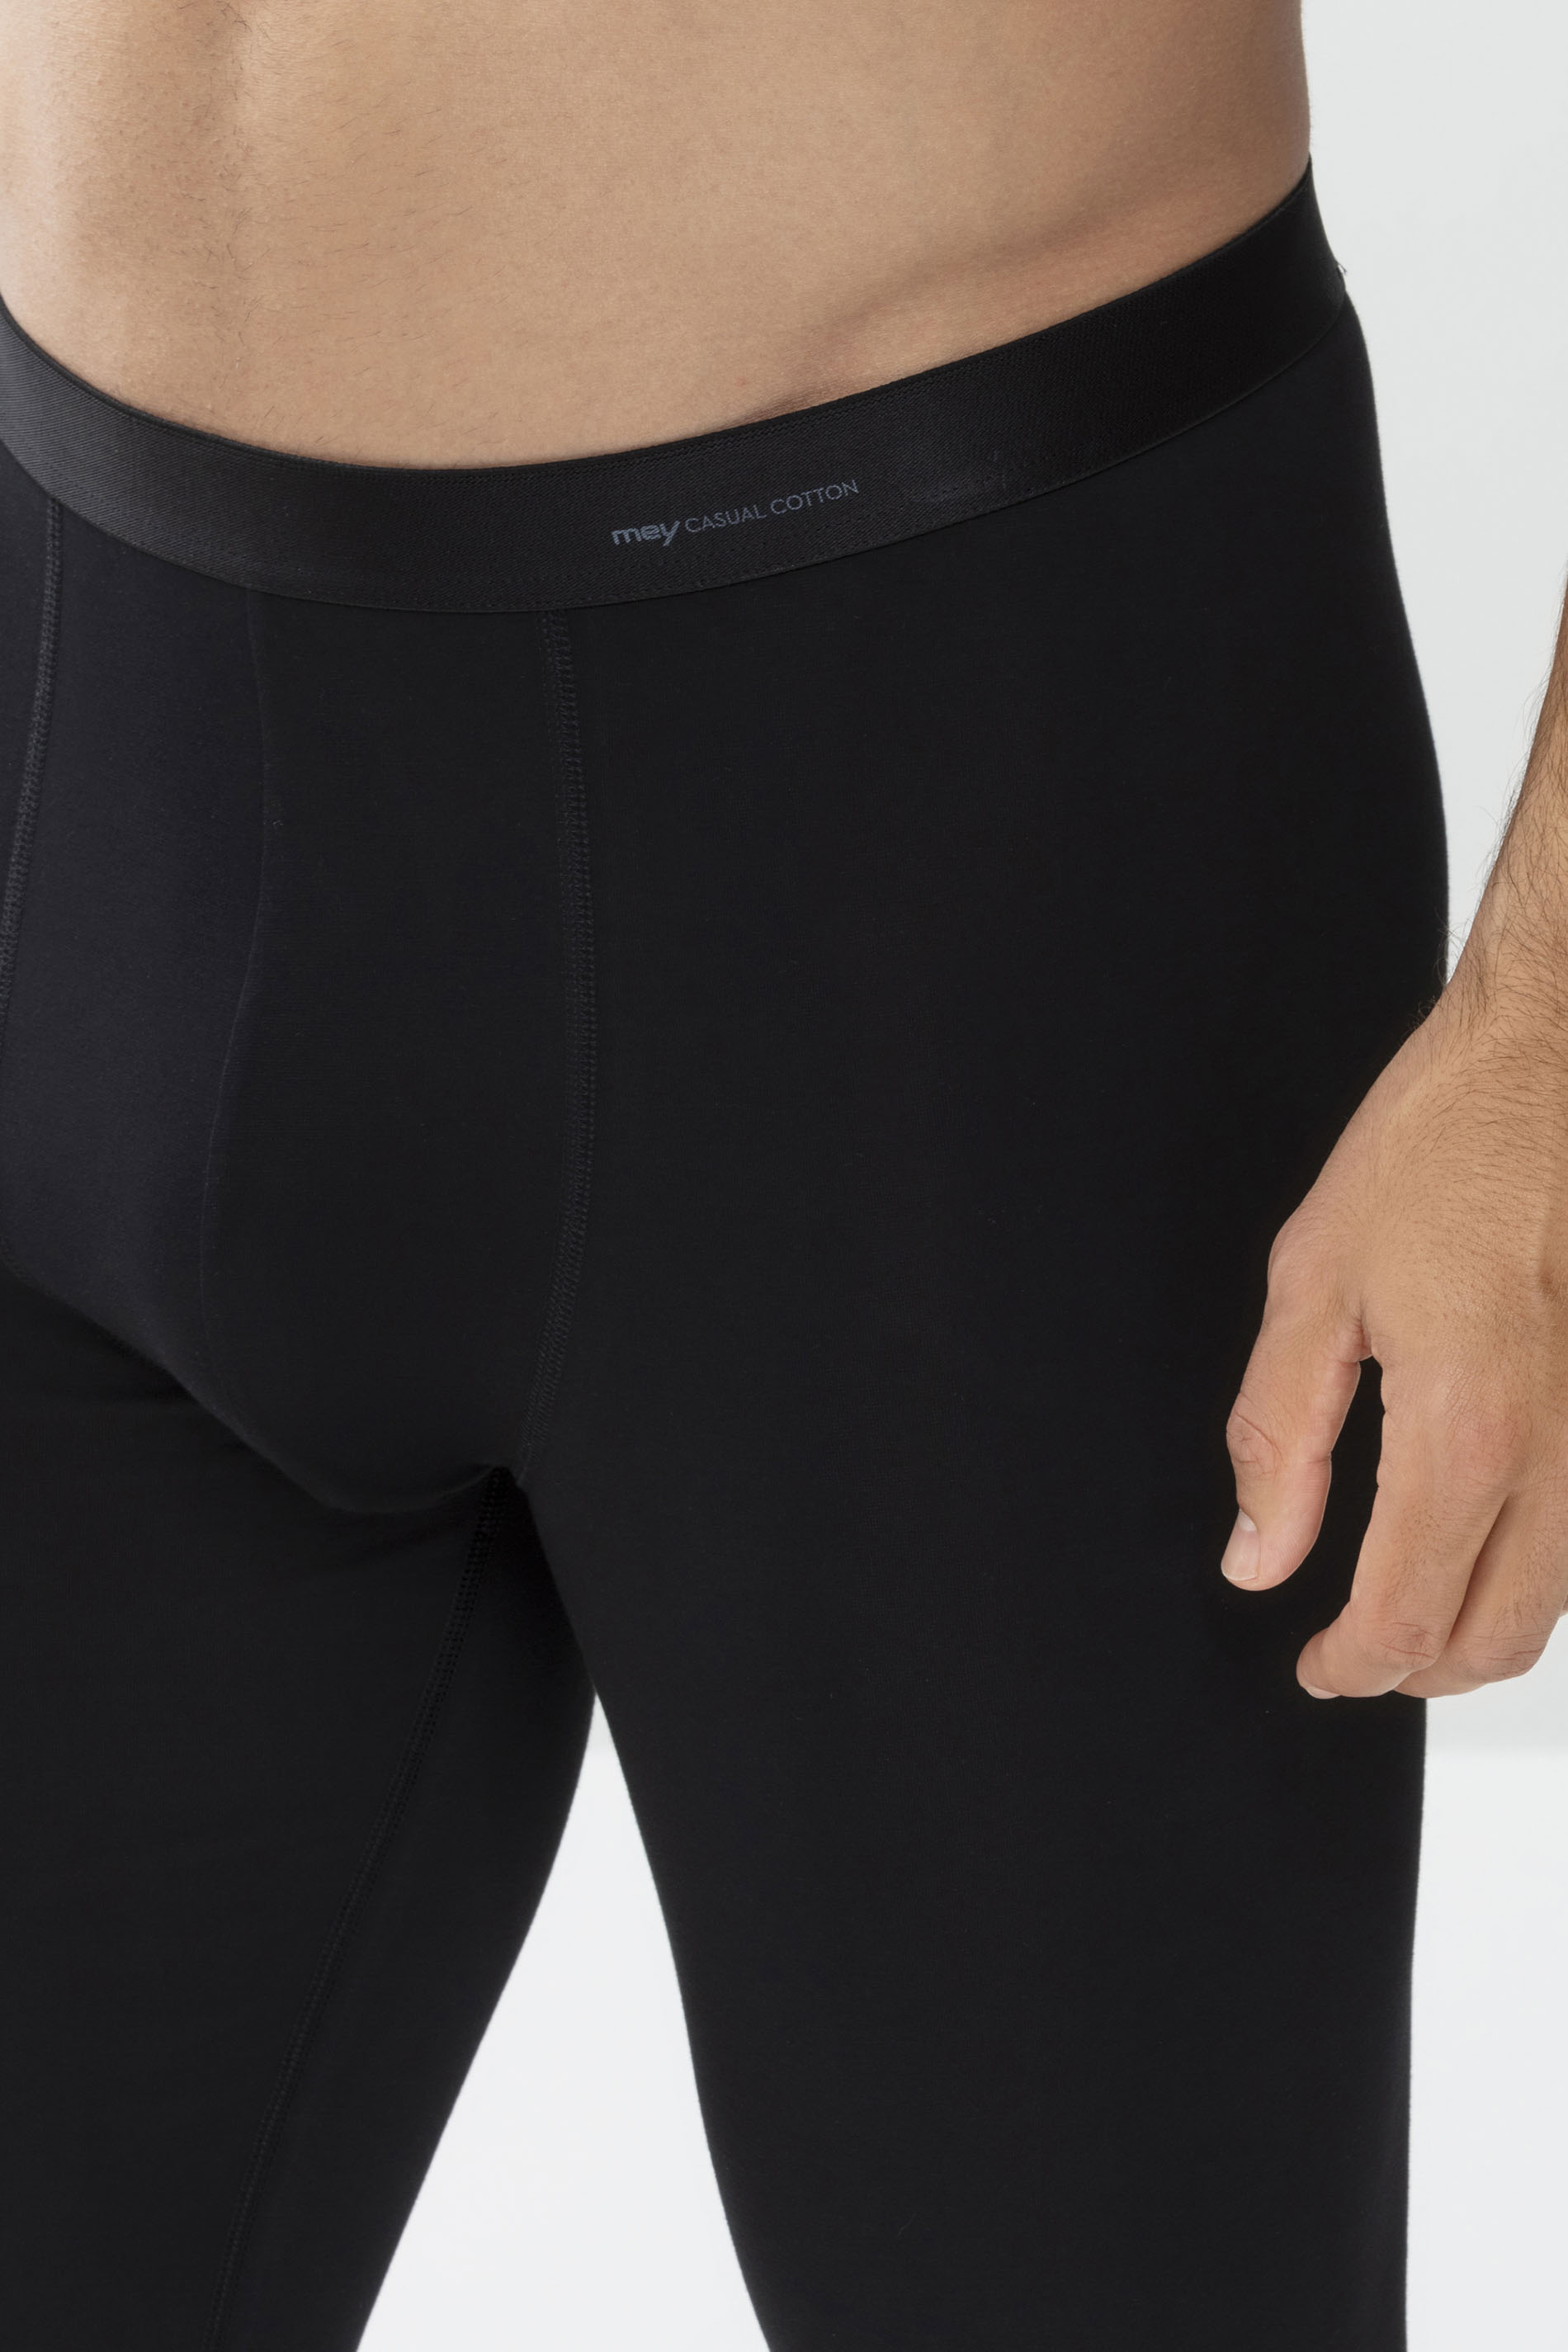 Long-Shorts Black Serie Casual Cotton Rear View | mey®